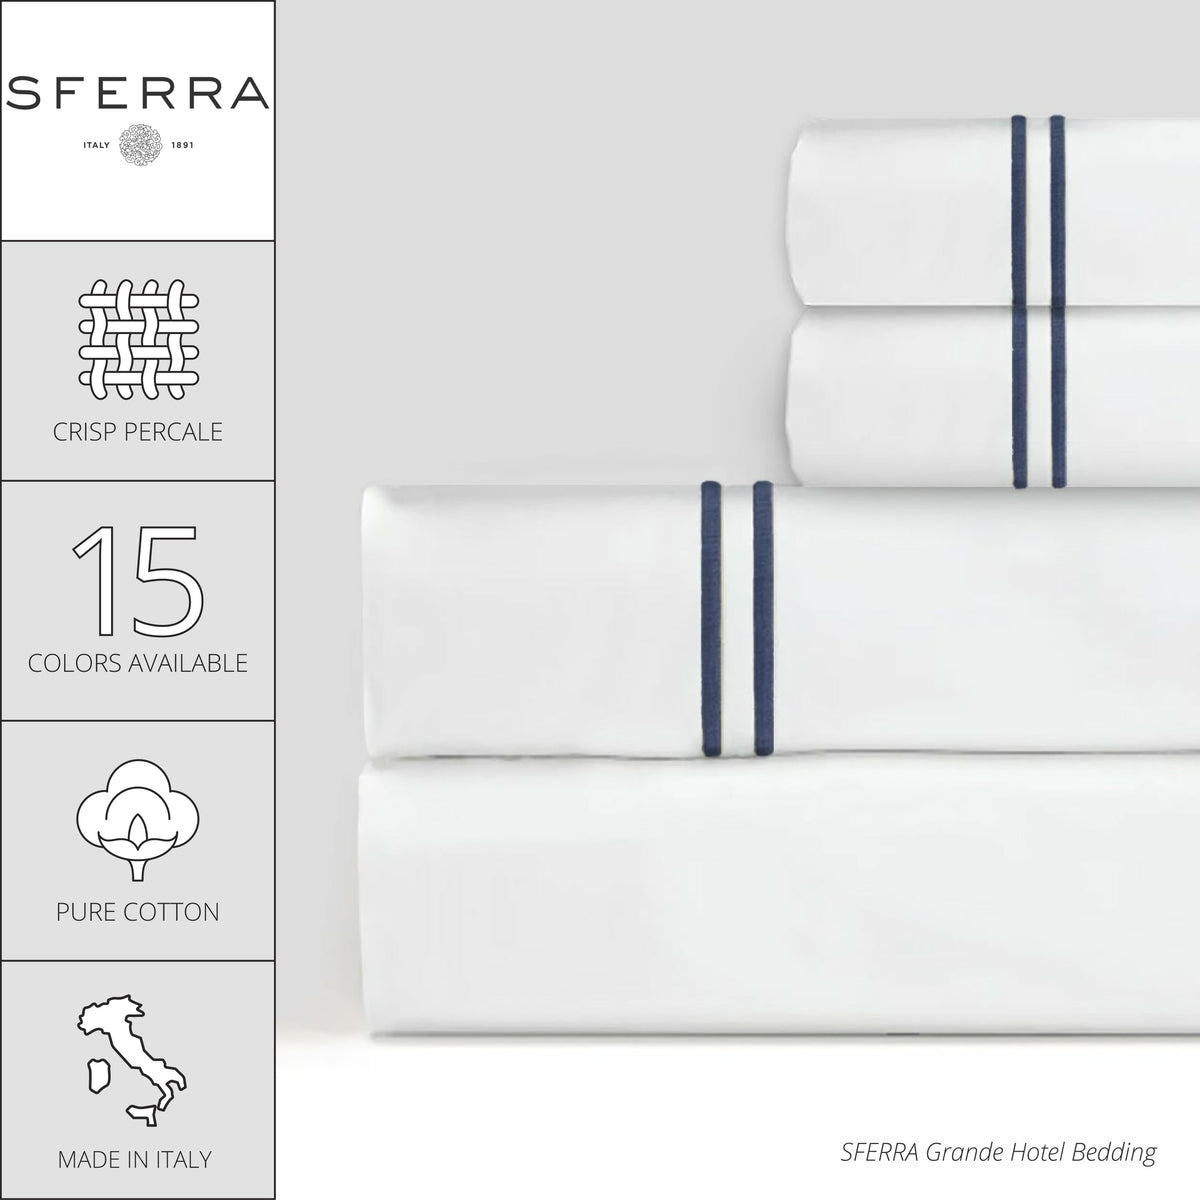 Sferra Grande Hotel Sheet Sets - White/Silver